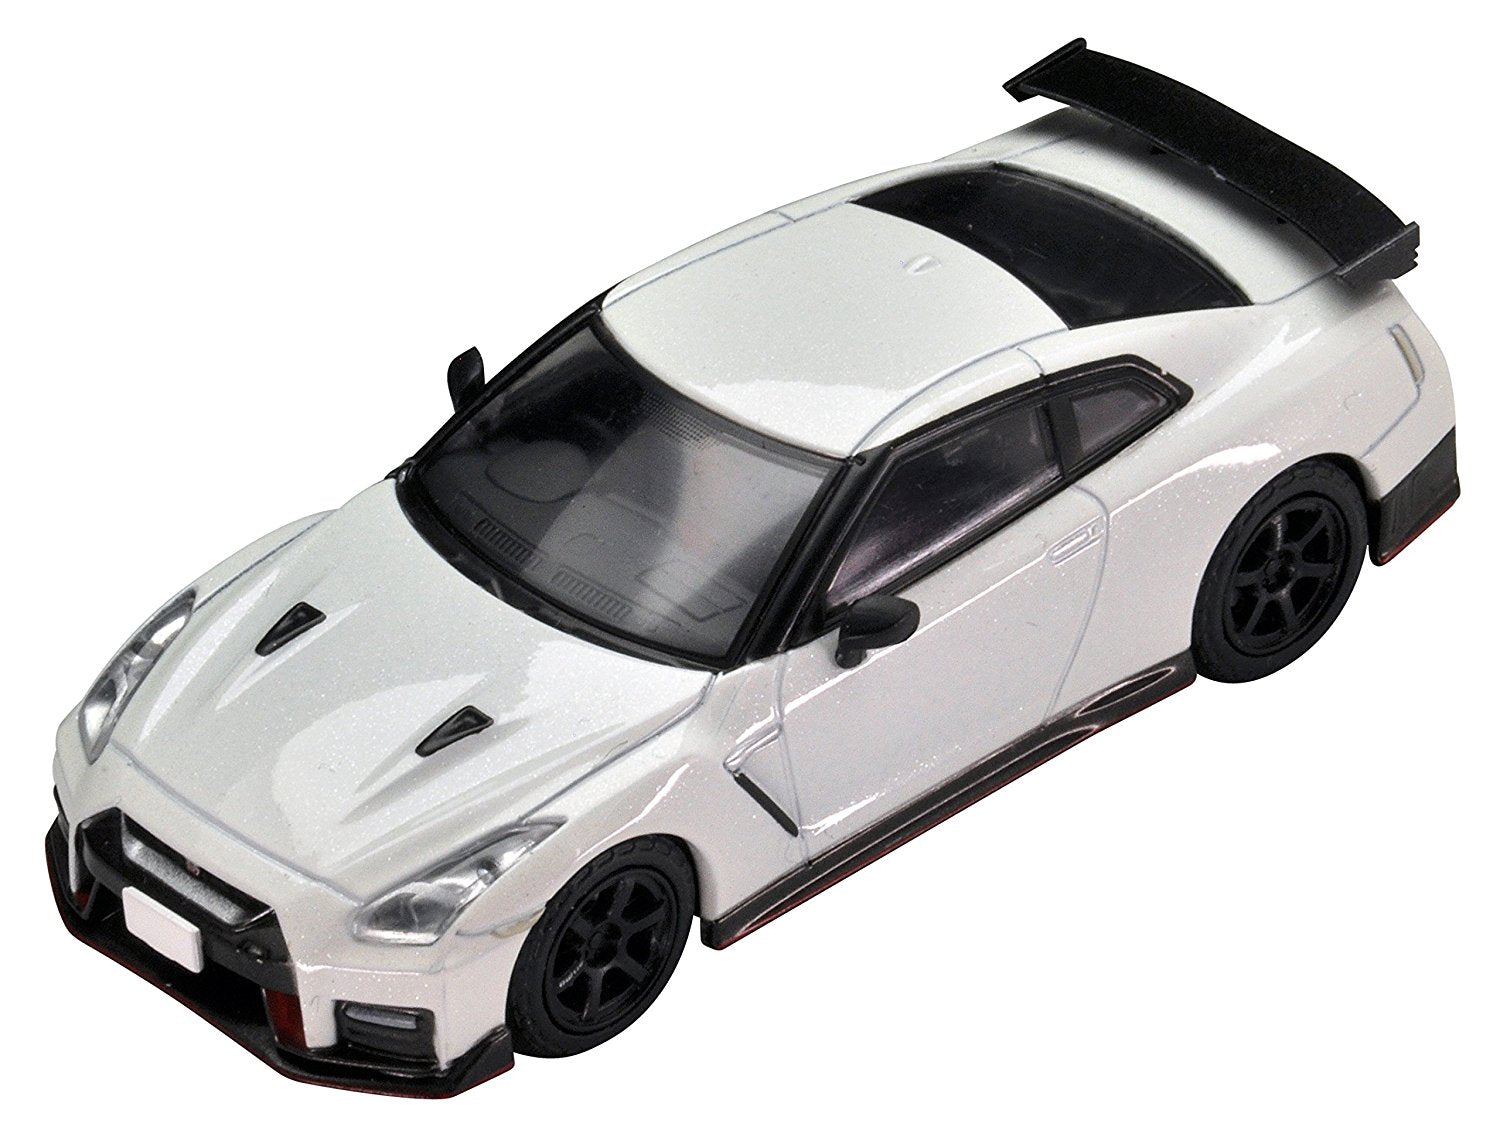 LV-N153a Nissan GT-R Nismo 2017 Model White